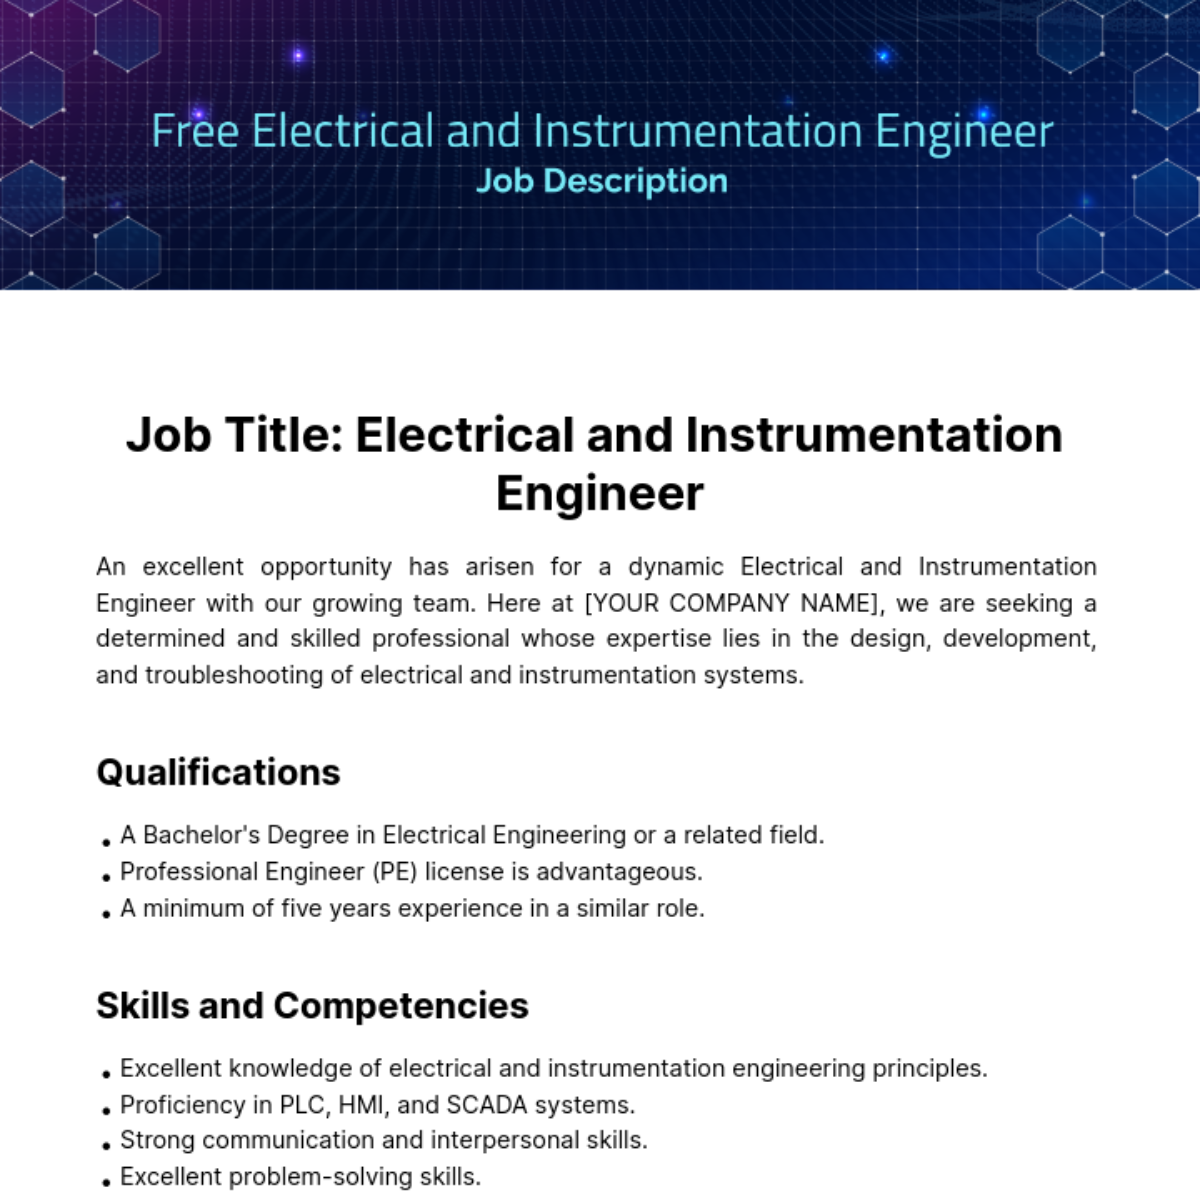 Electrical and Instrumentation Engineer Job Description Template